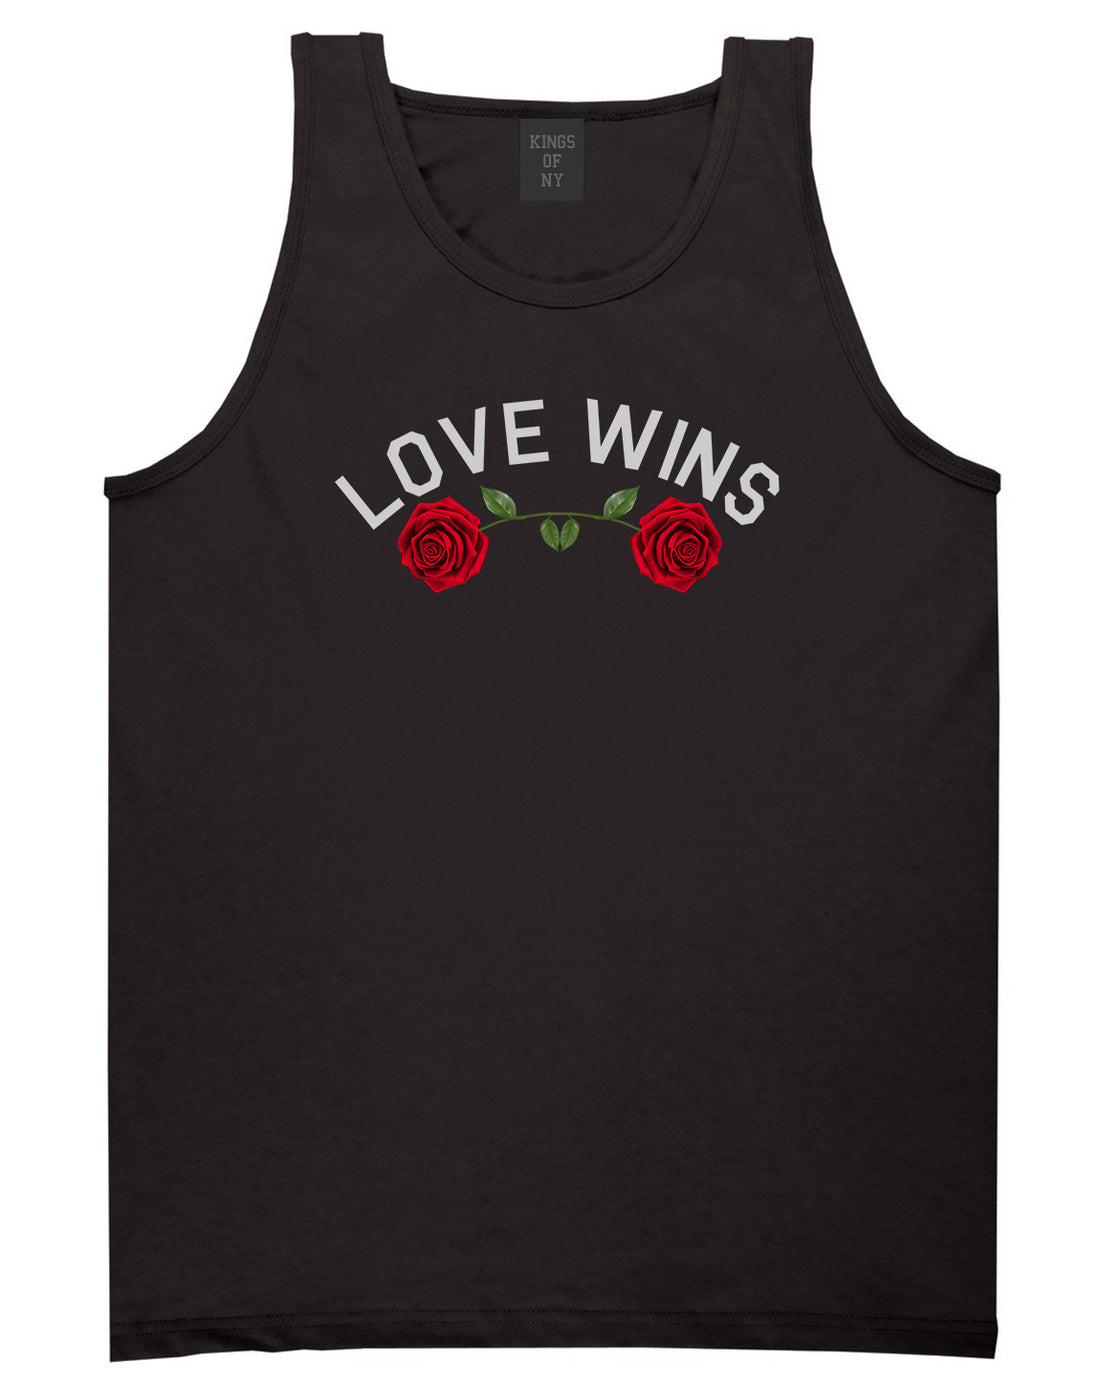 Love Wins Rose Mens Tank Top Shirt Black by Kings Of NY